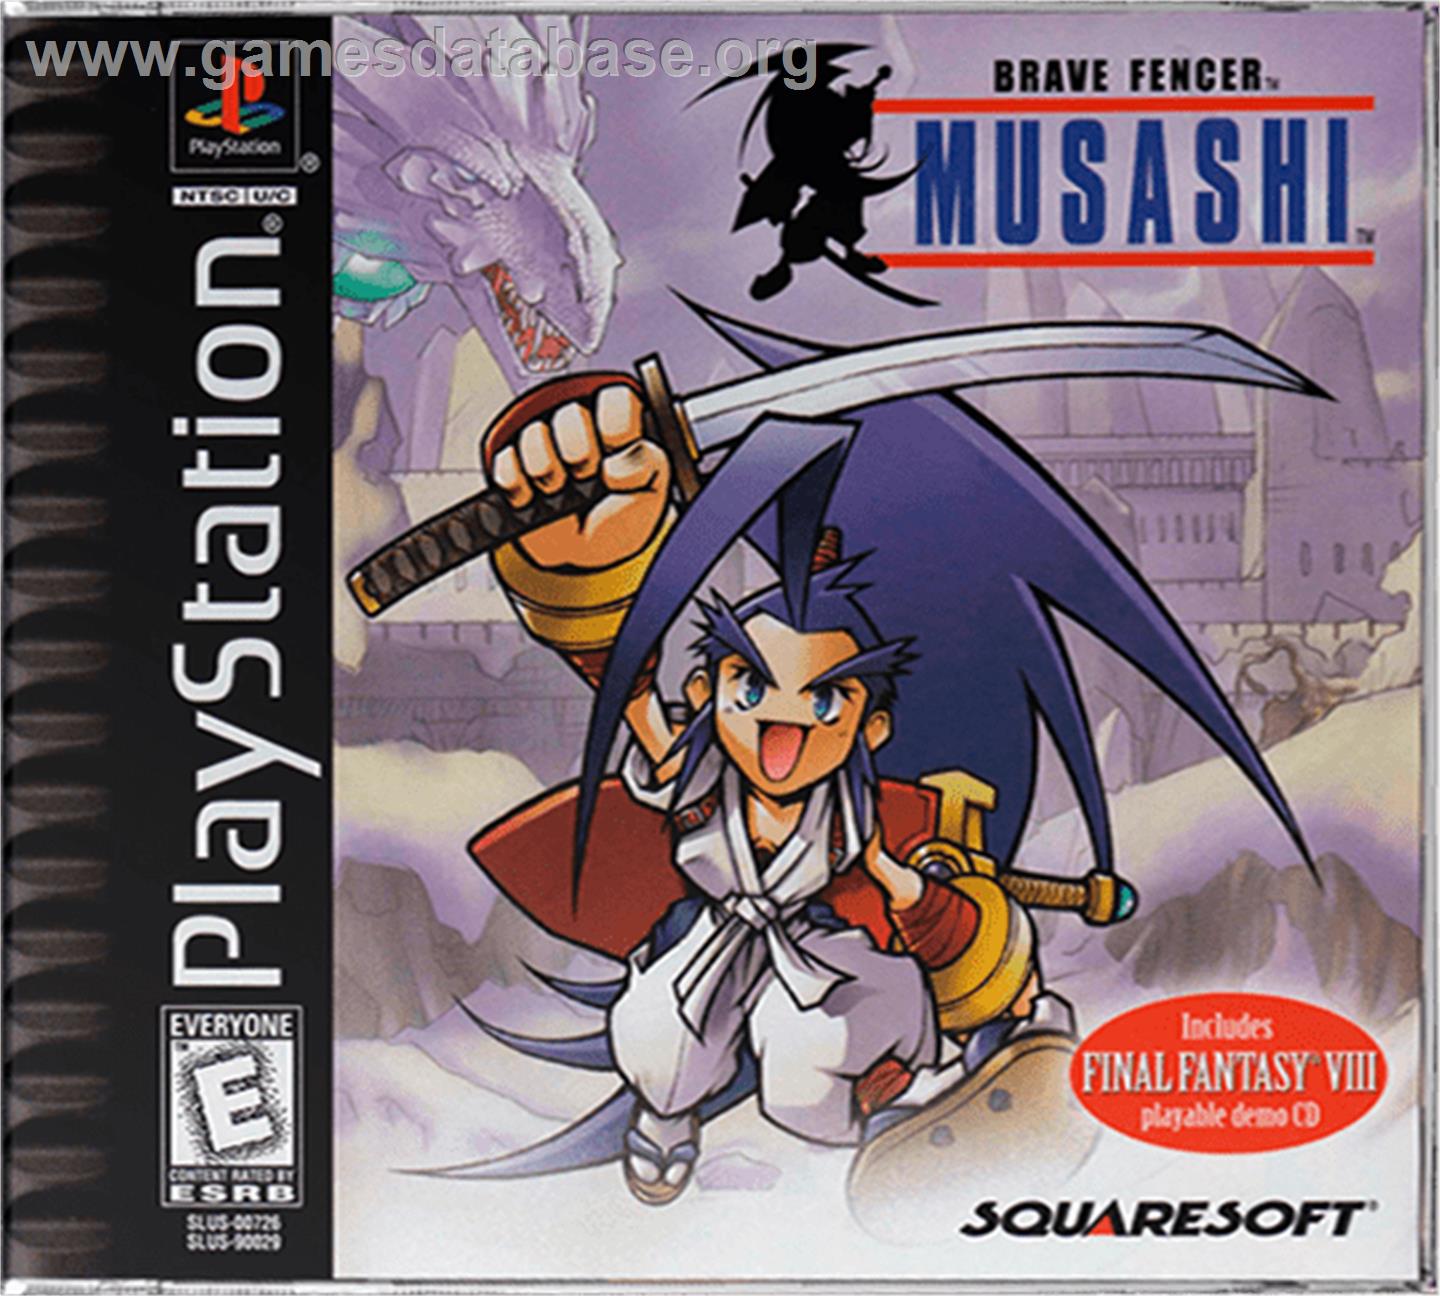 Brave Fencer Musashi - Sony Playstation - Artwork - Box